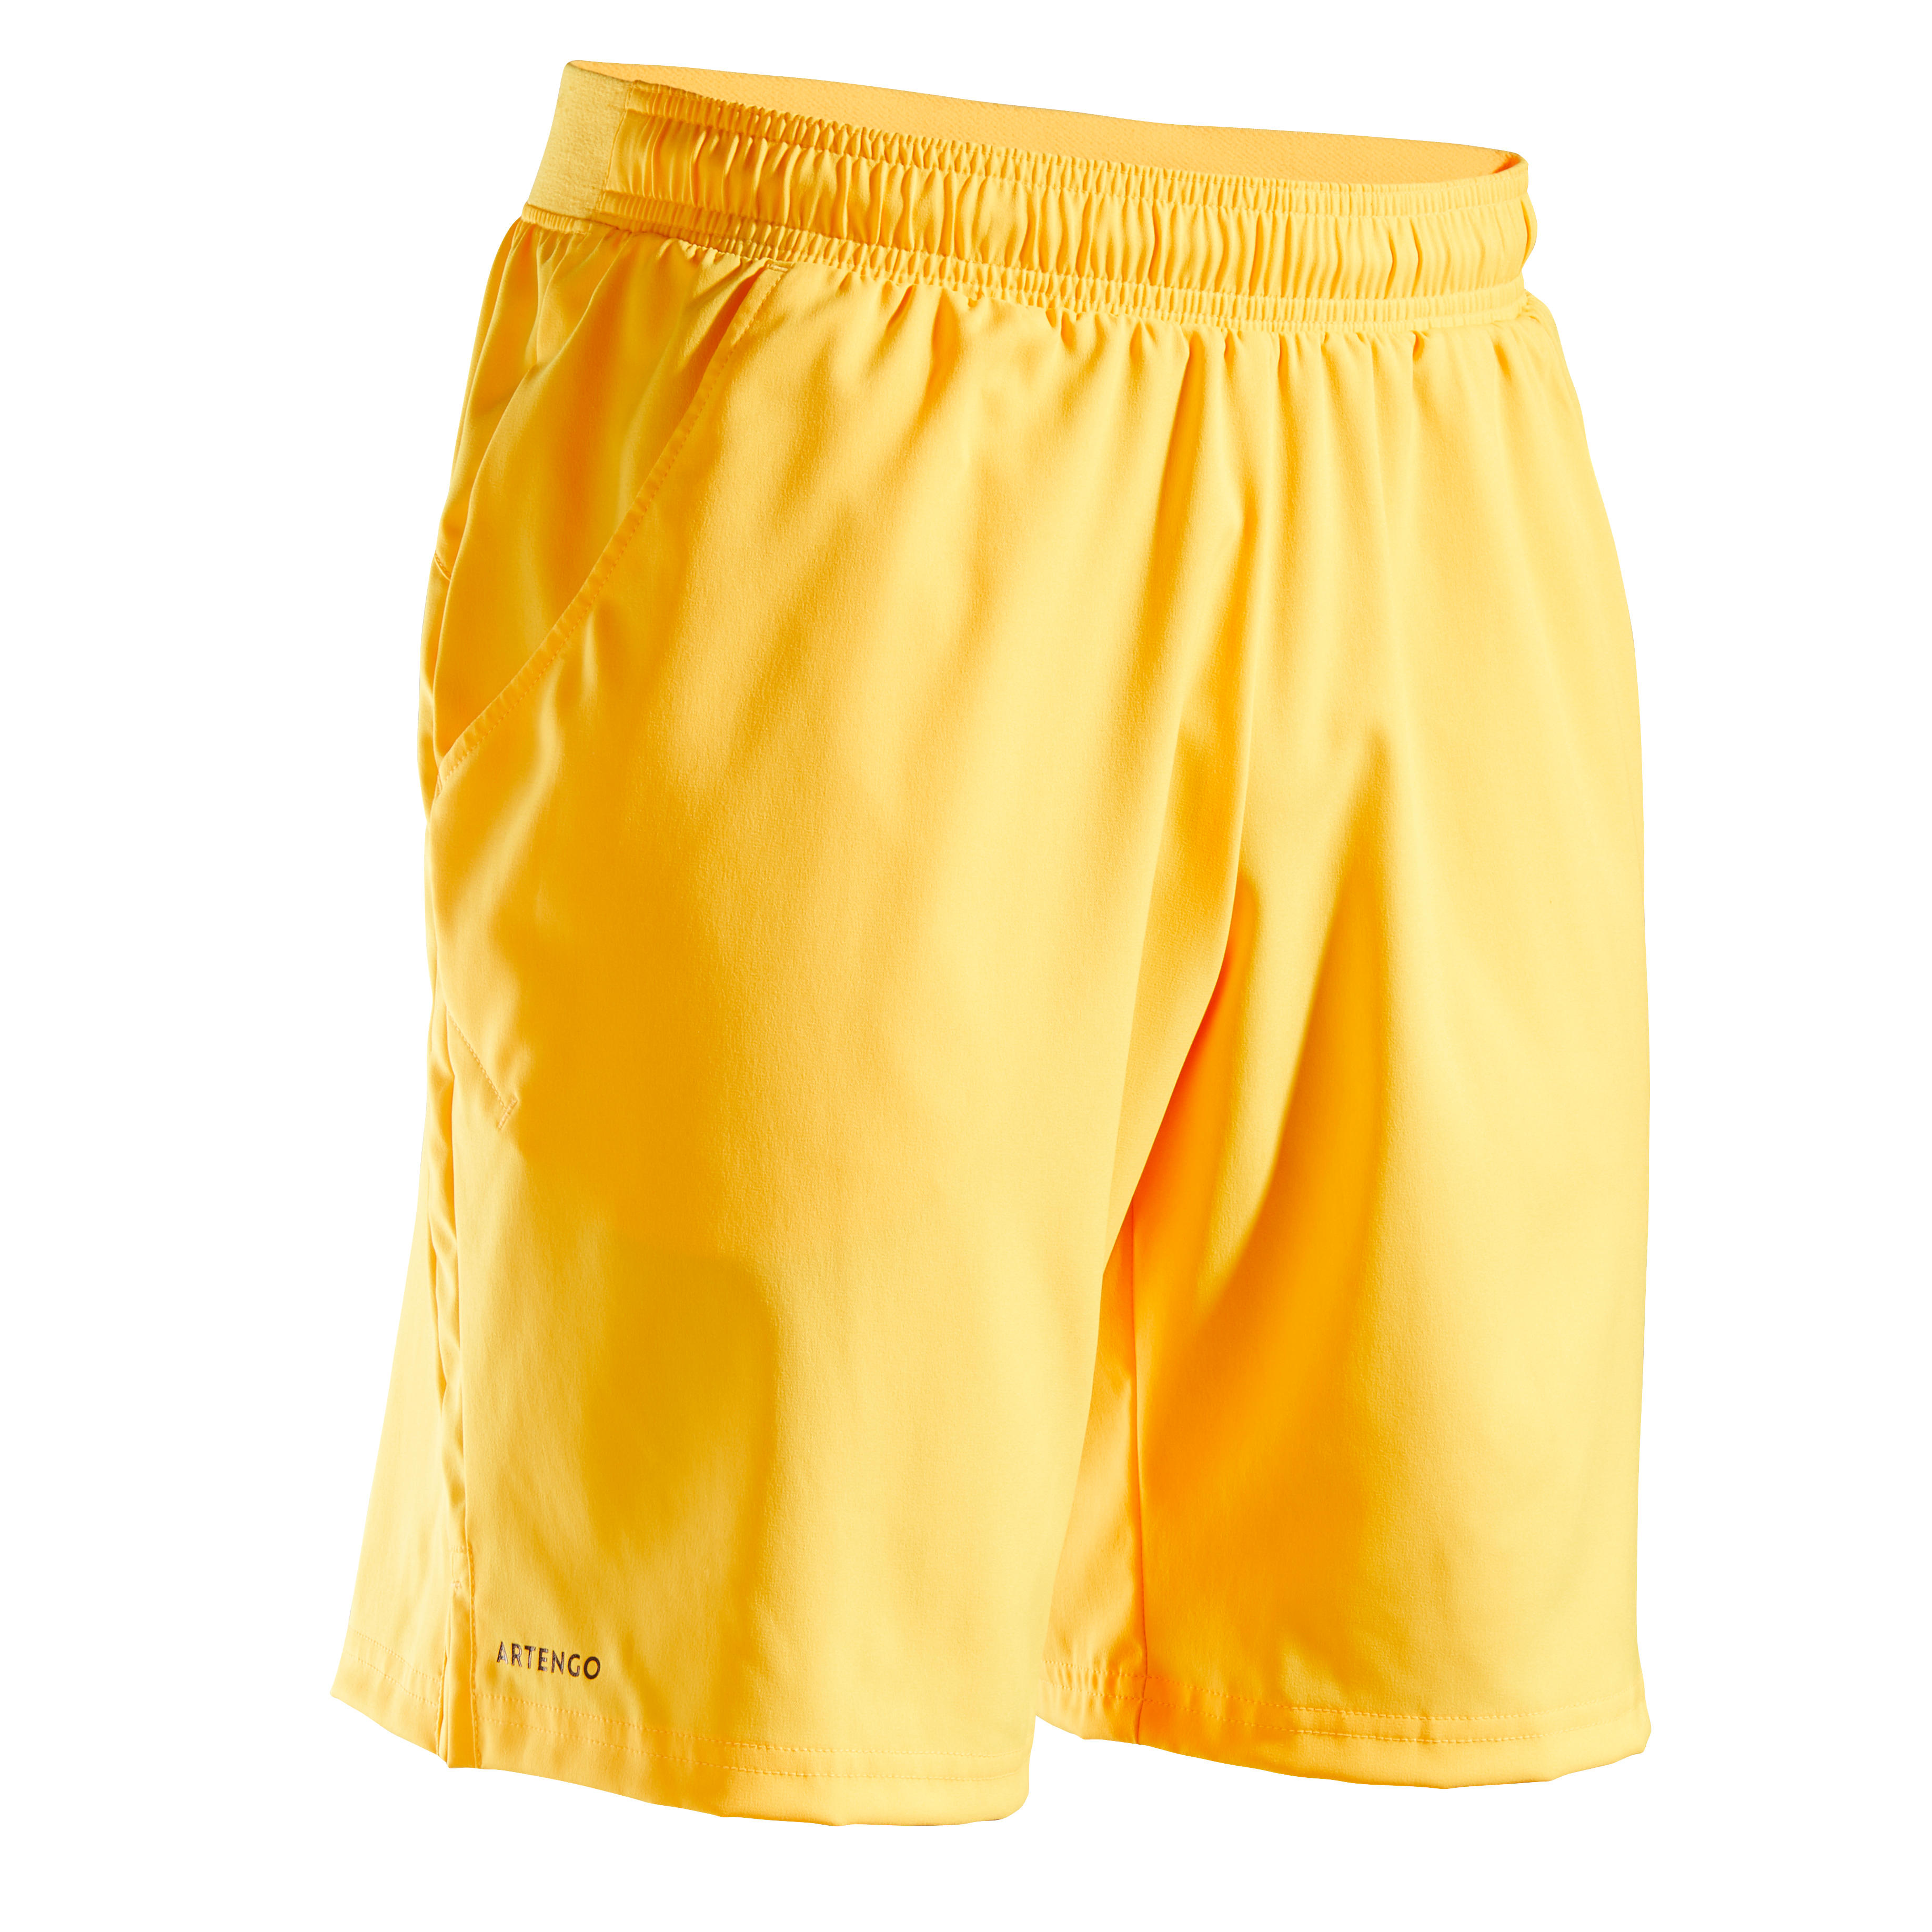 decathlon tennis shorts